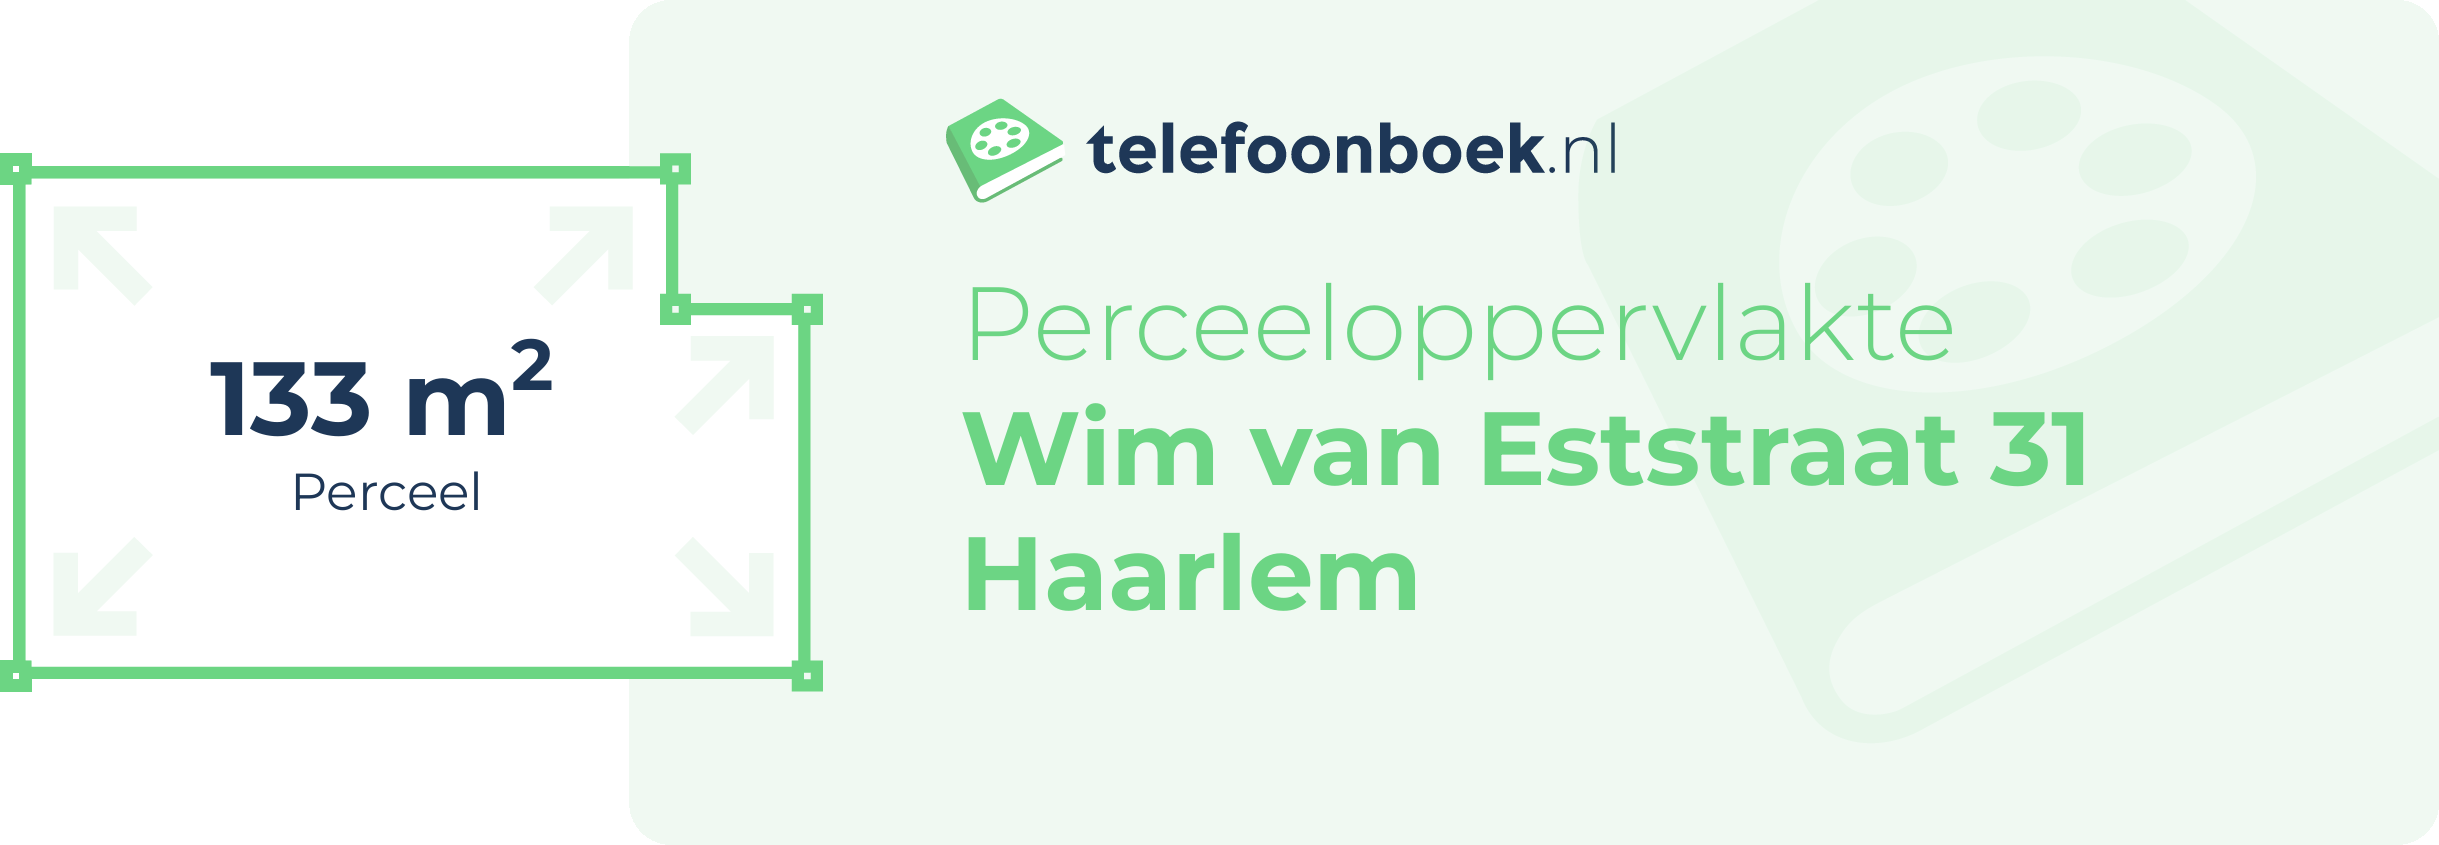 Perceeloppervlakte Wim Van Eststraat 31 Haarlem